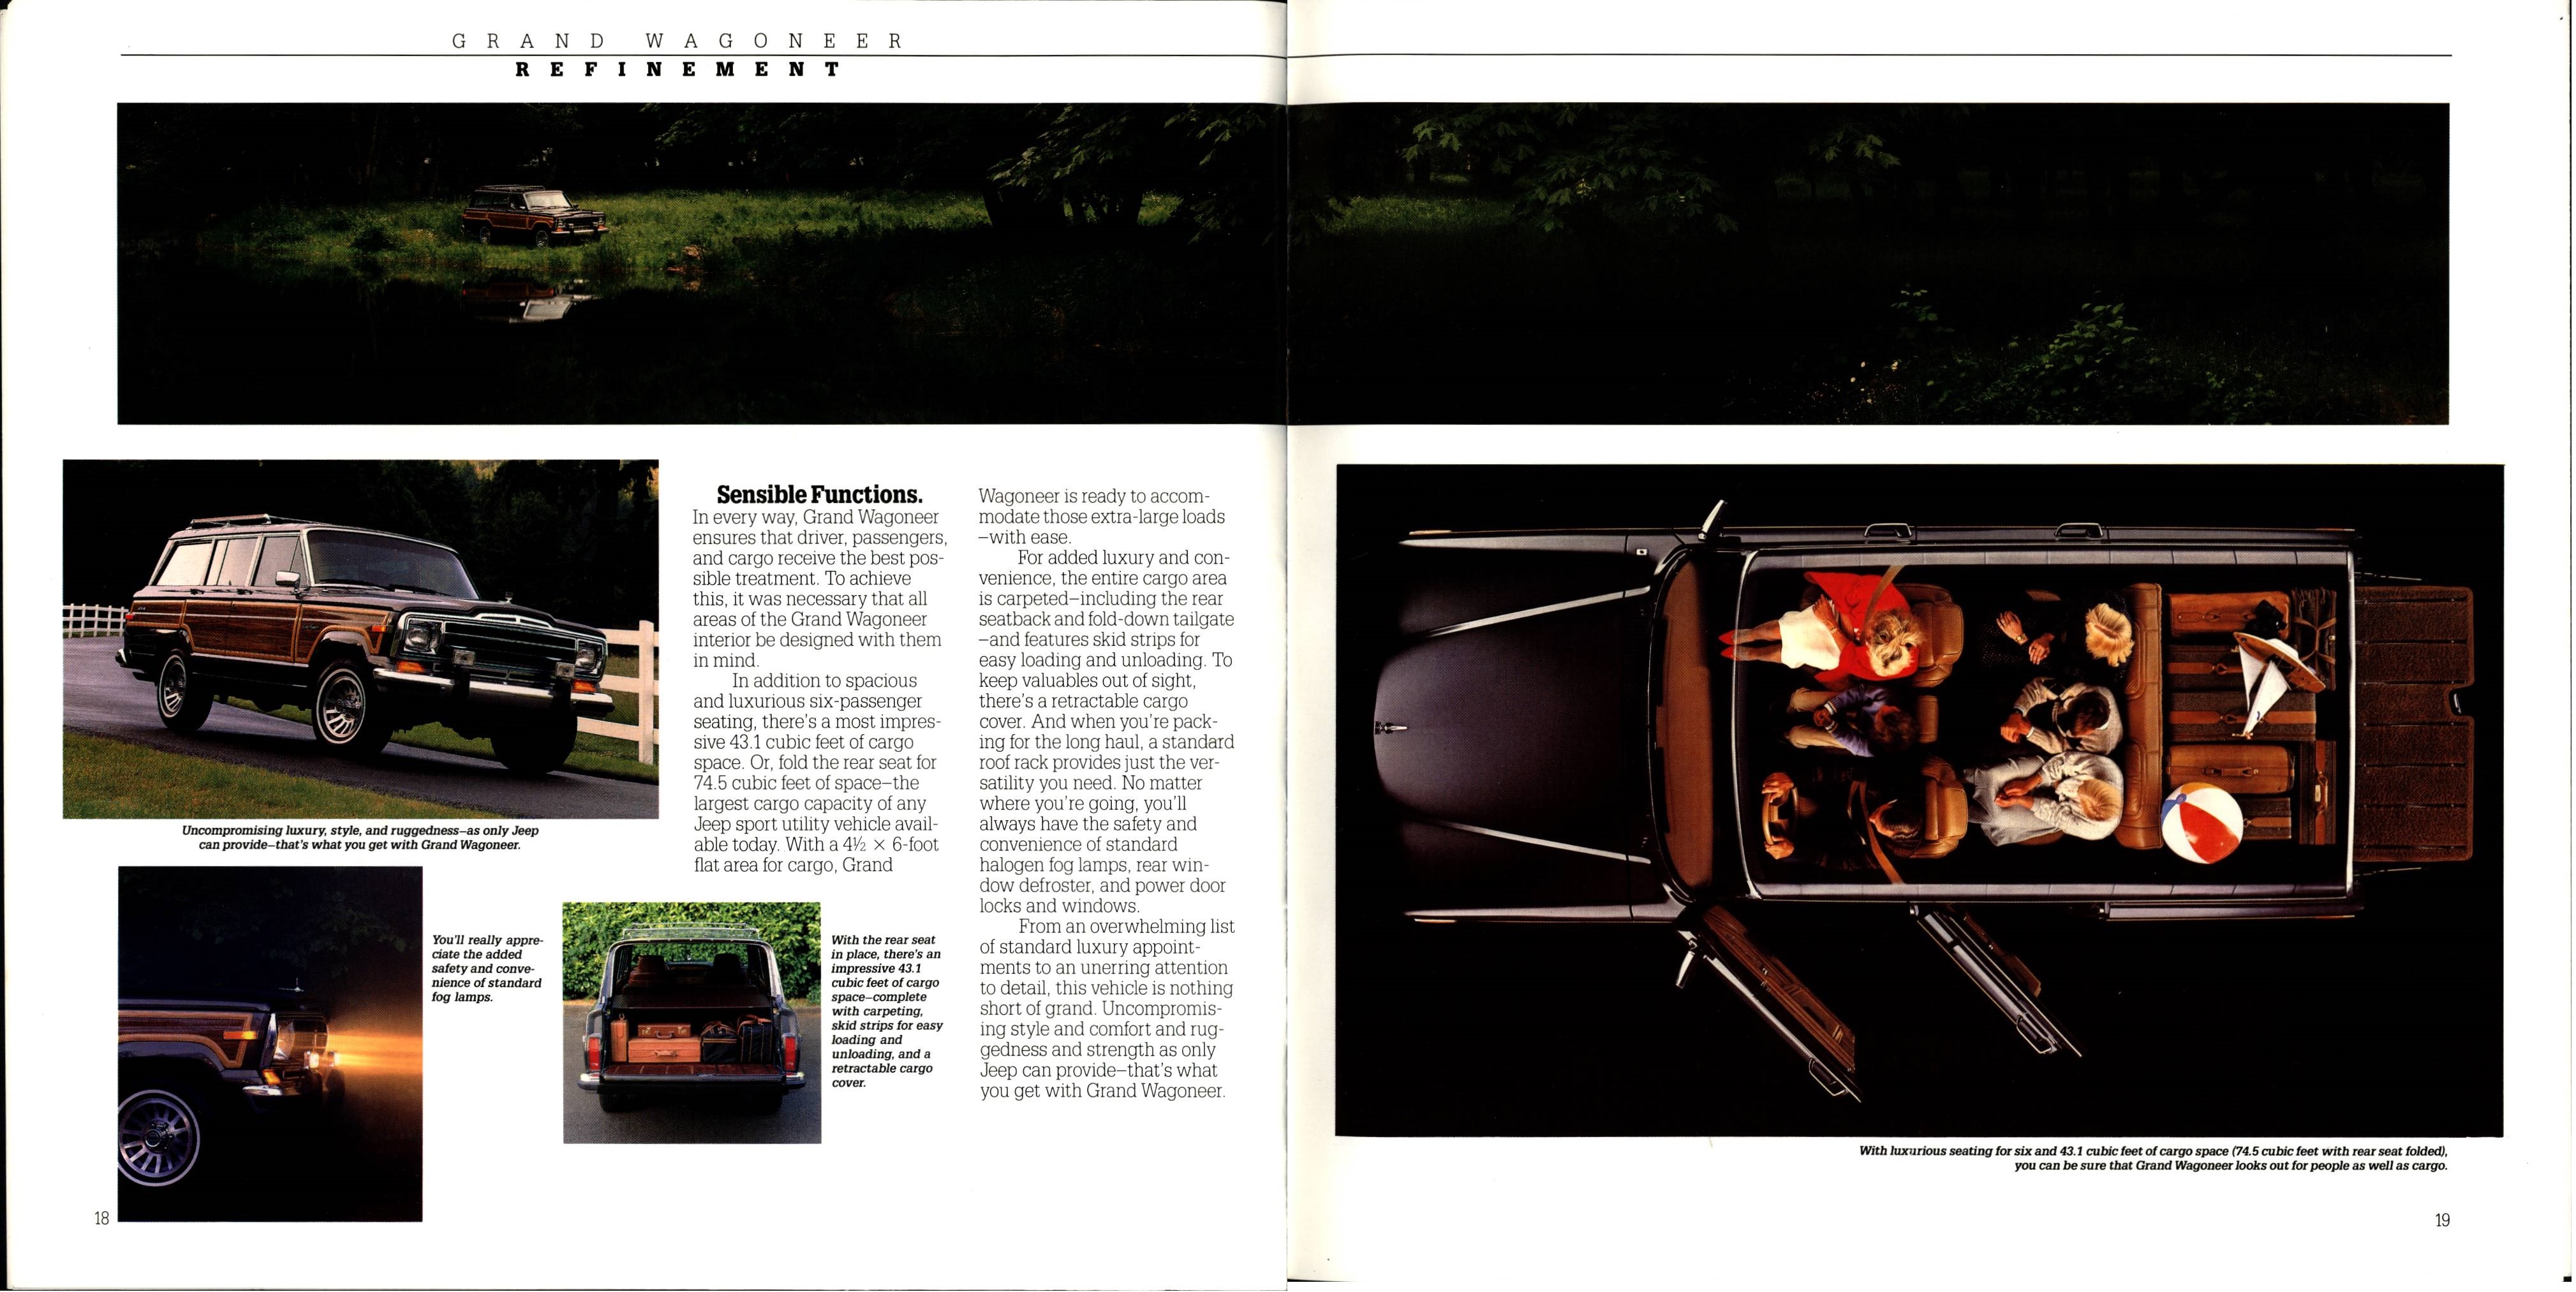 1988 Jeep Wagoneers Brochure 18-19